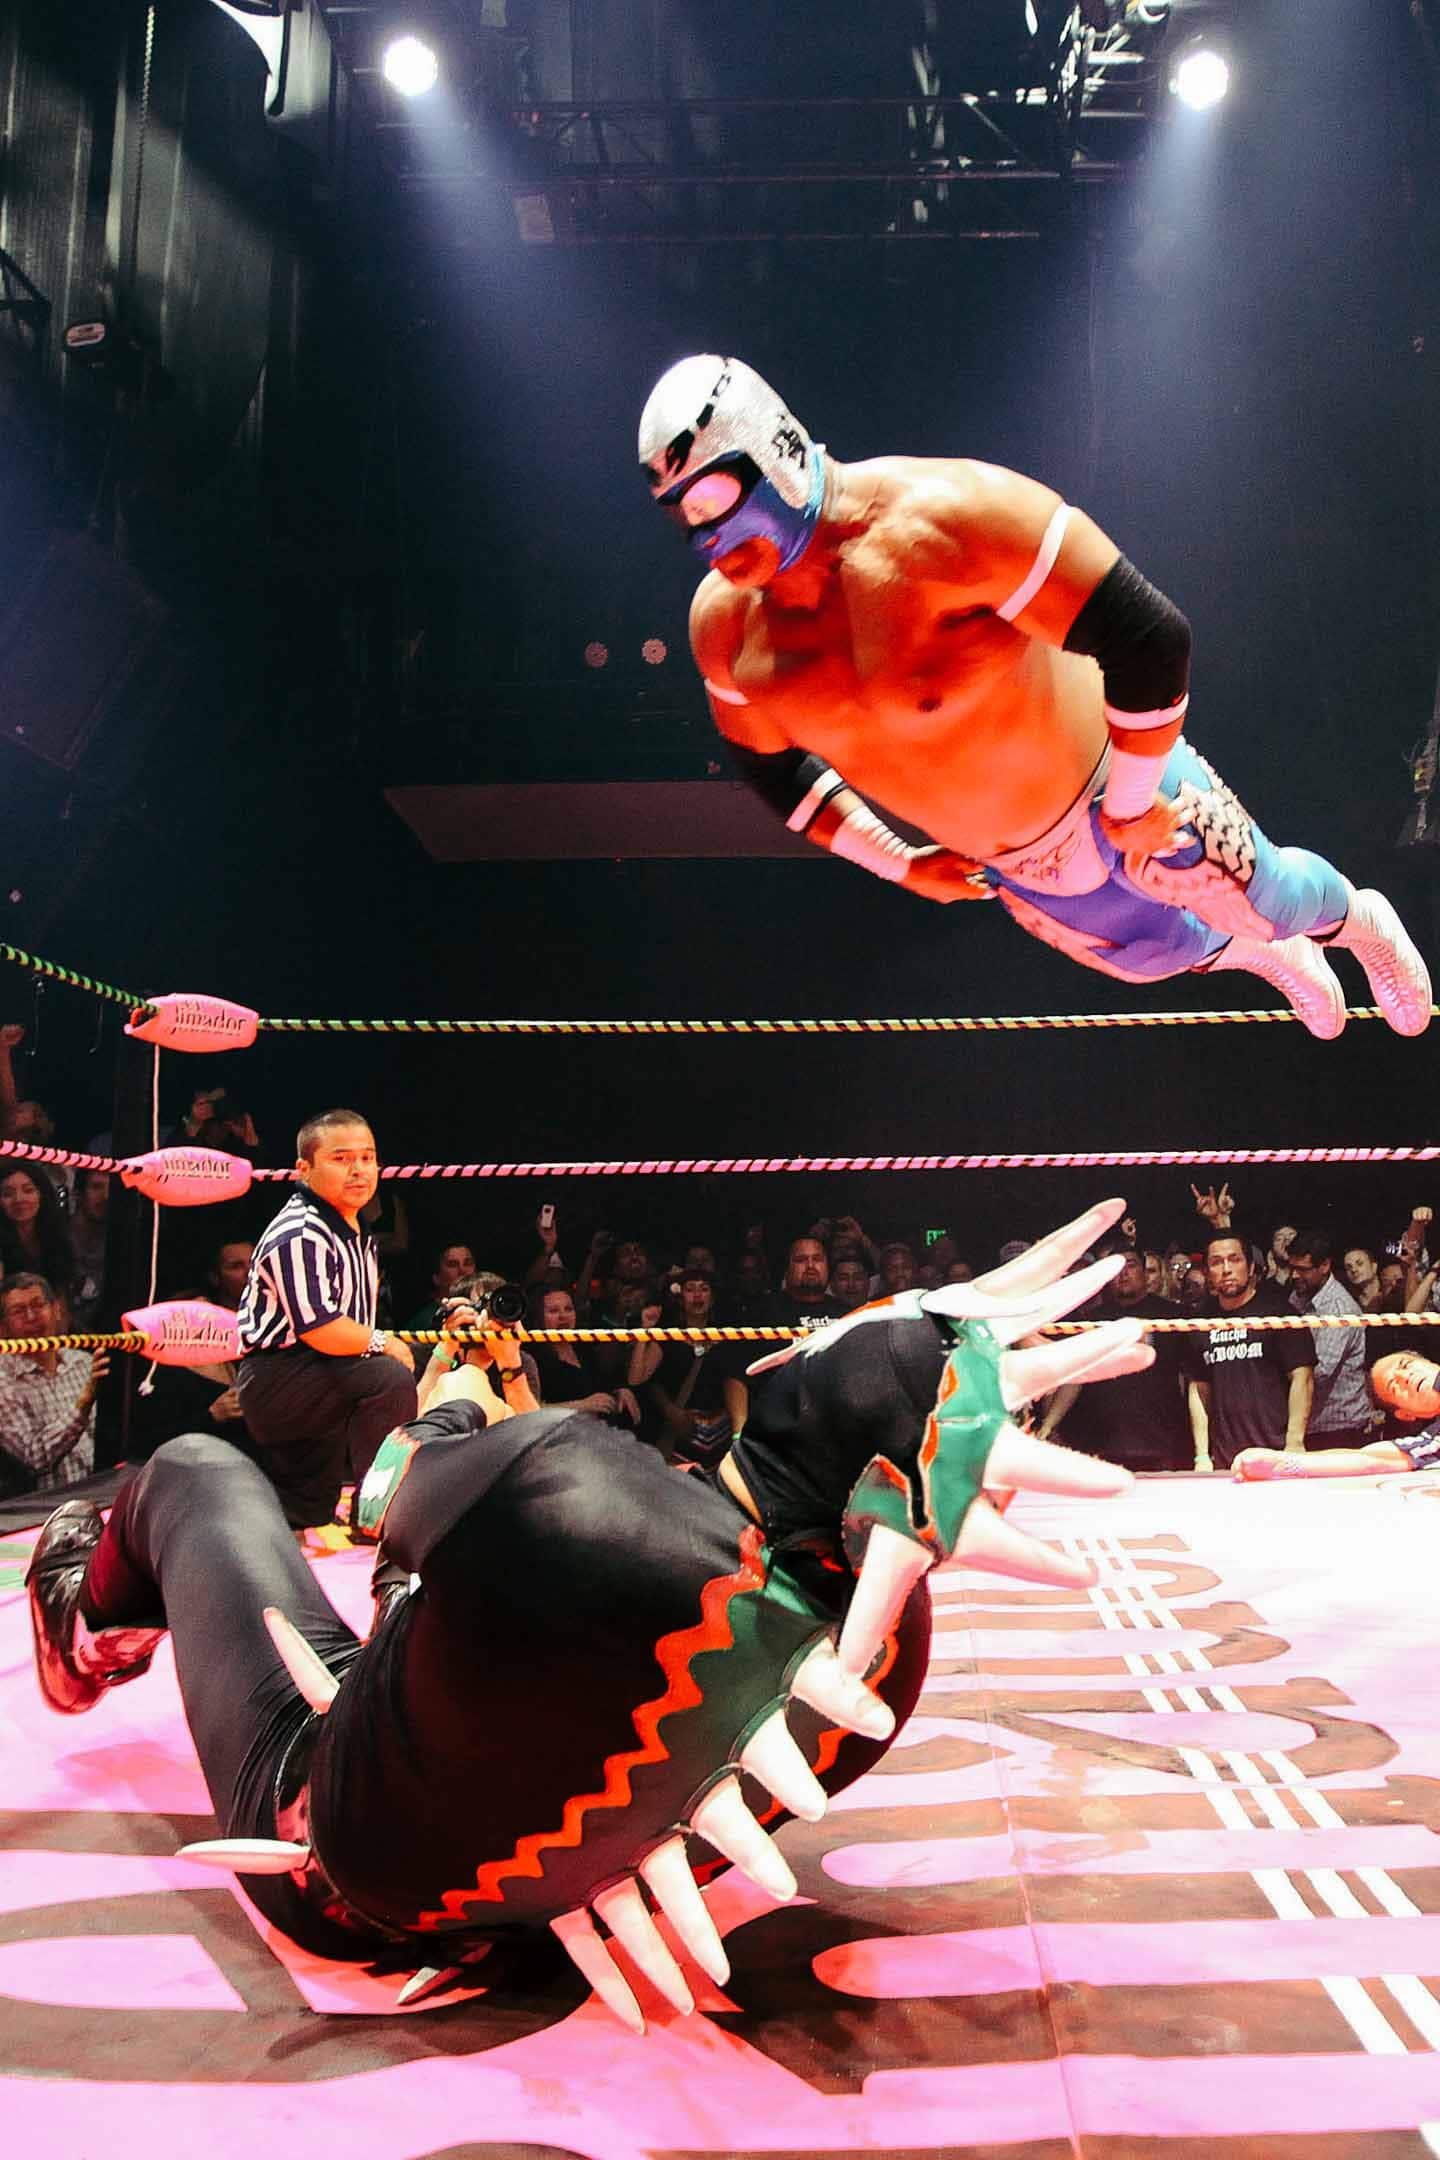 2023 Lucha libre (Mexican wrestling) (private tour)